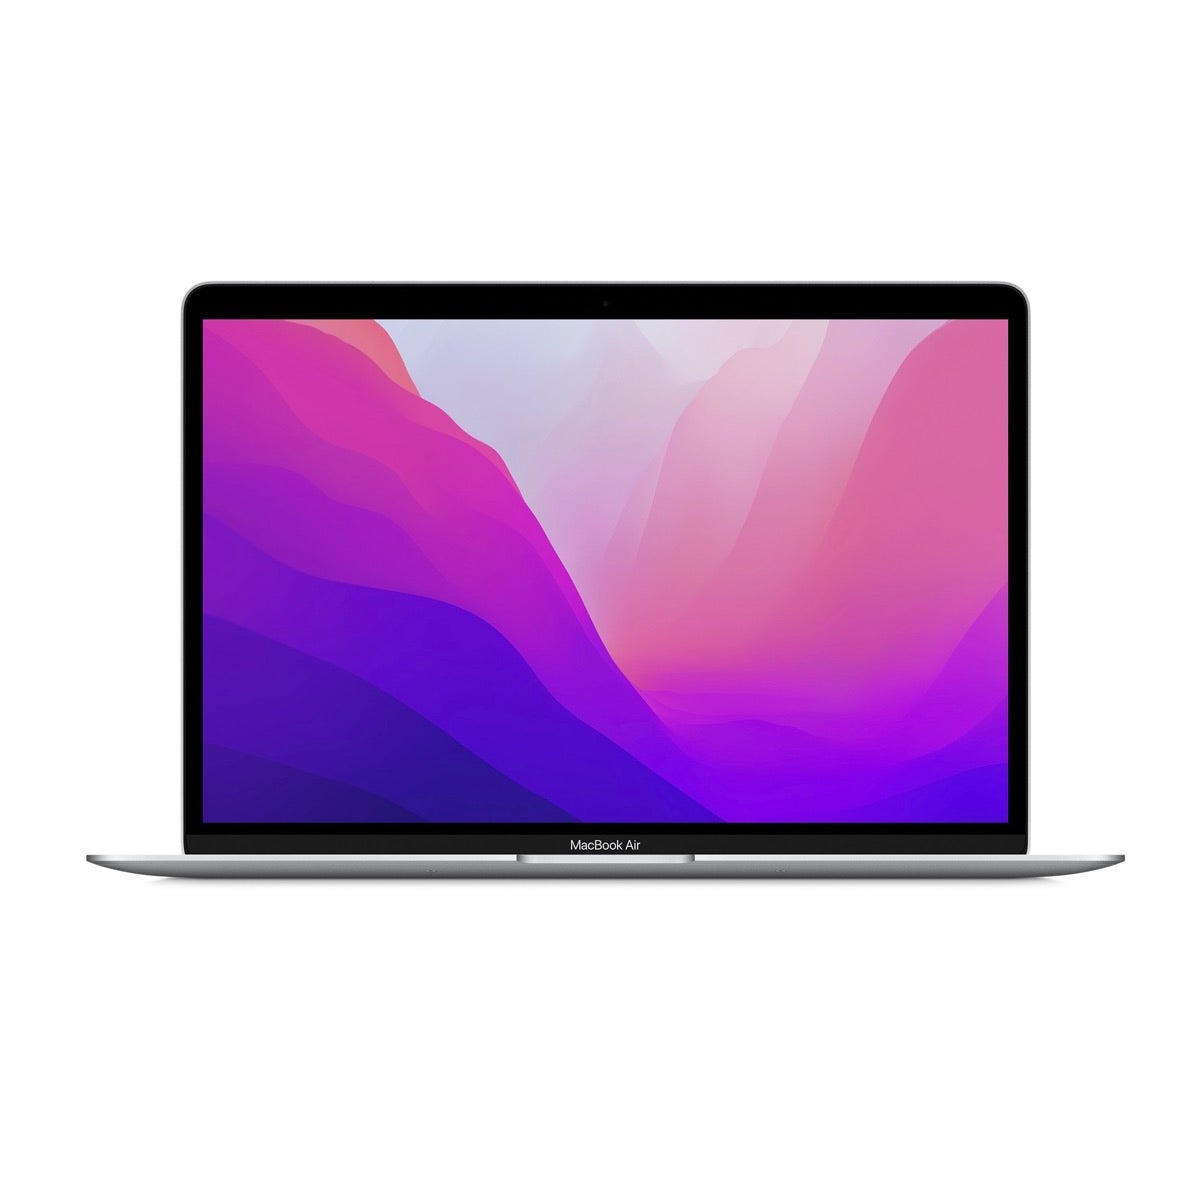 MacBook Air 13-inch | Apple M1 chip | 256GB – Silver